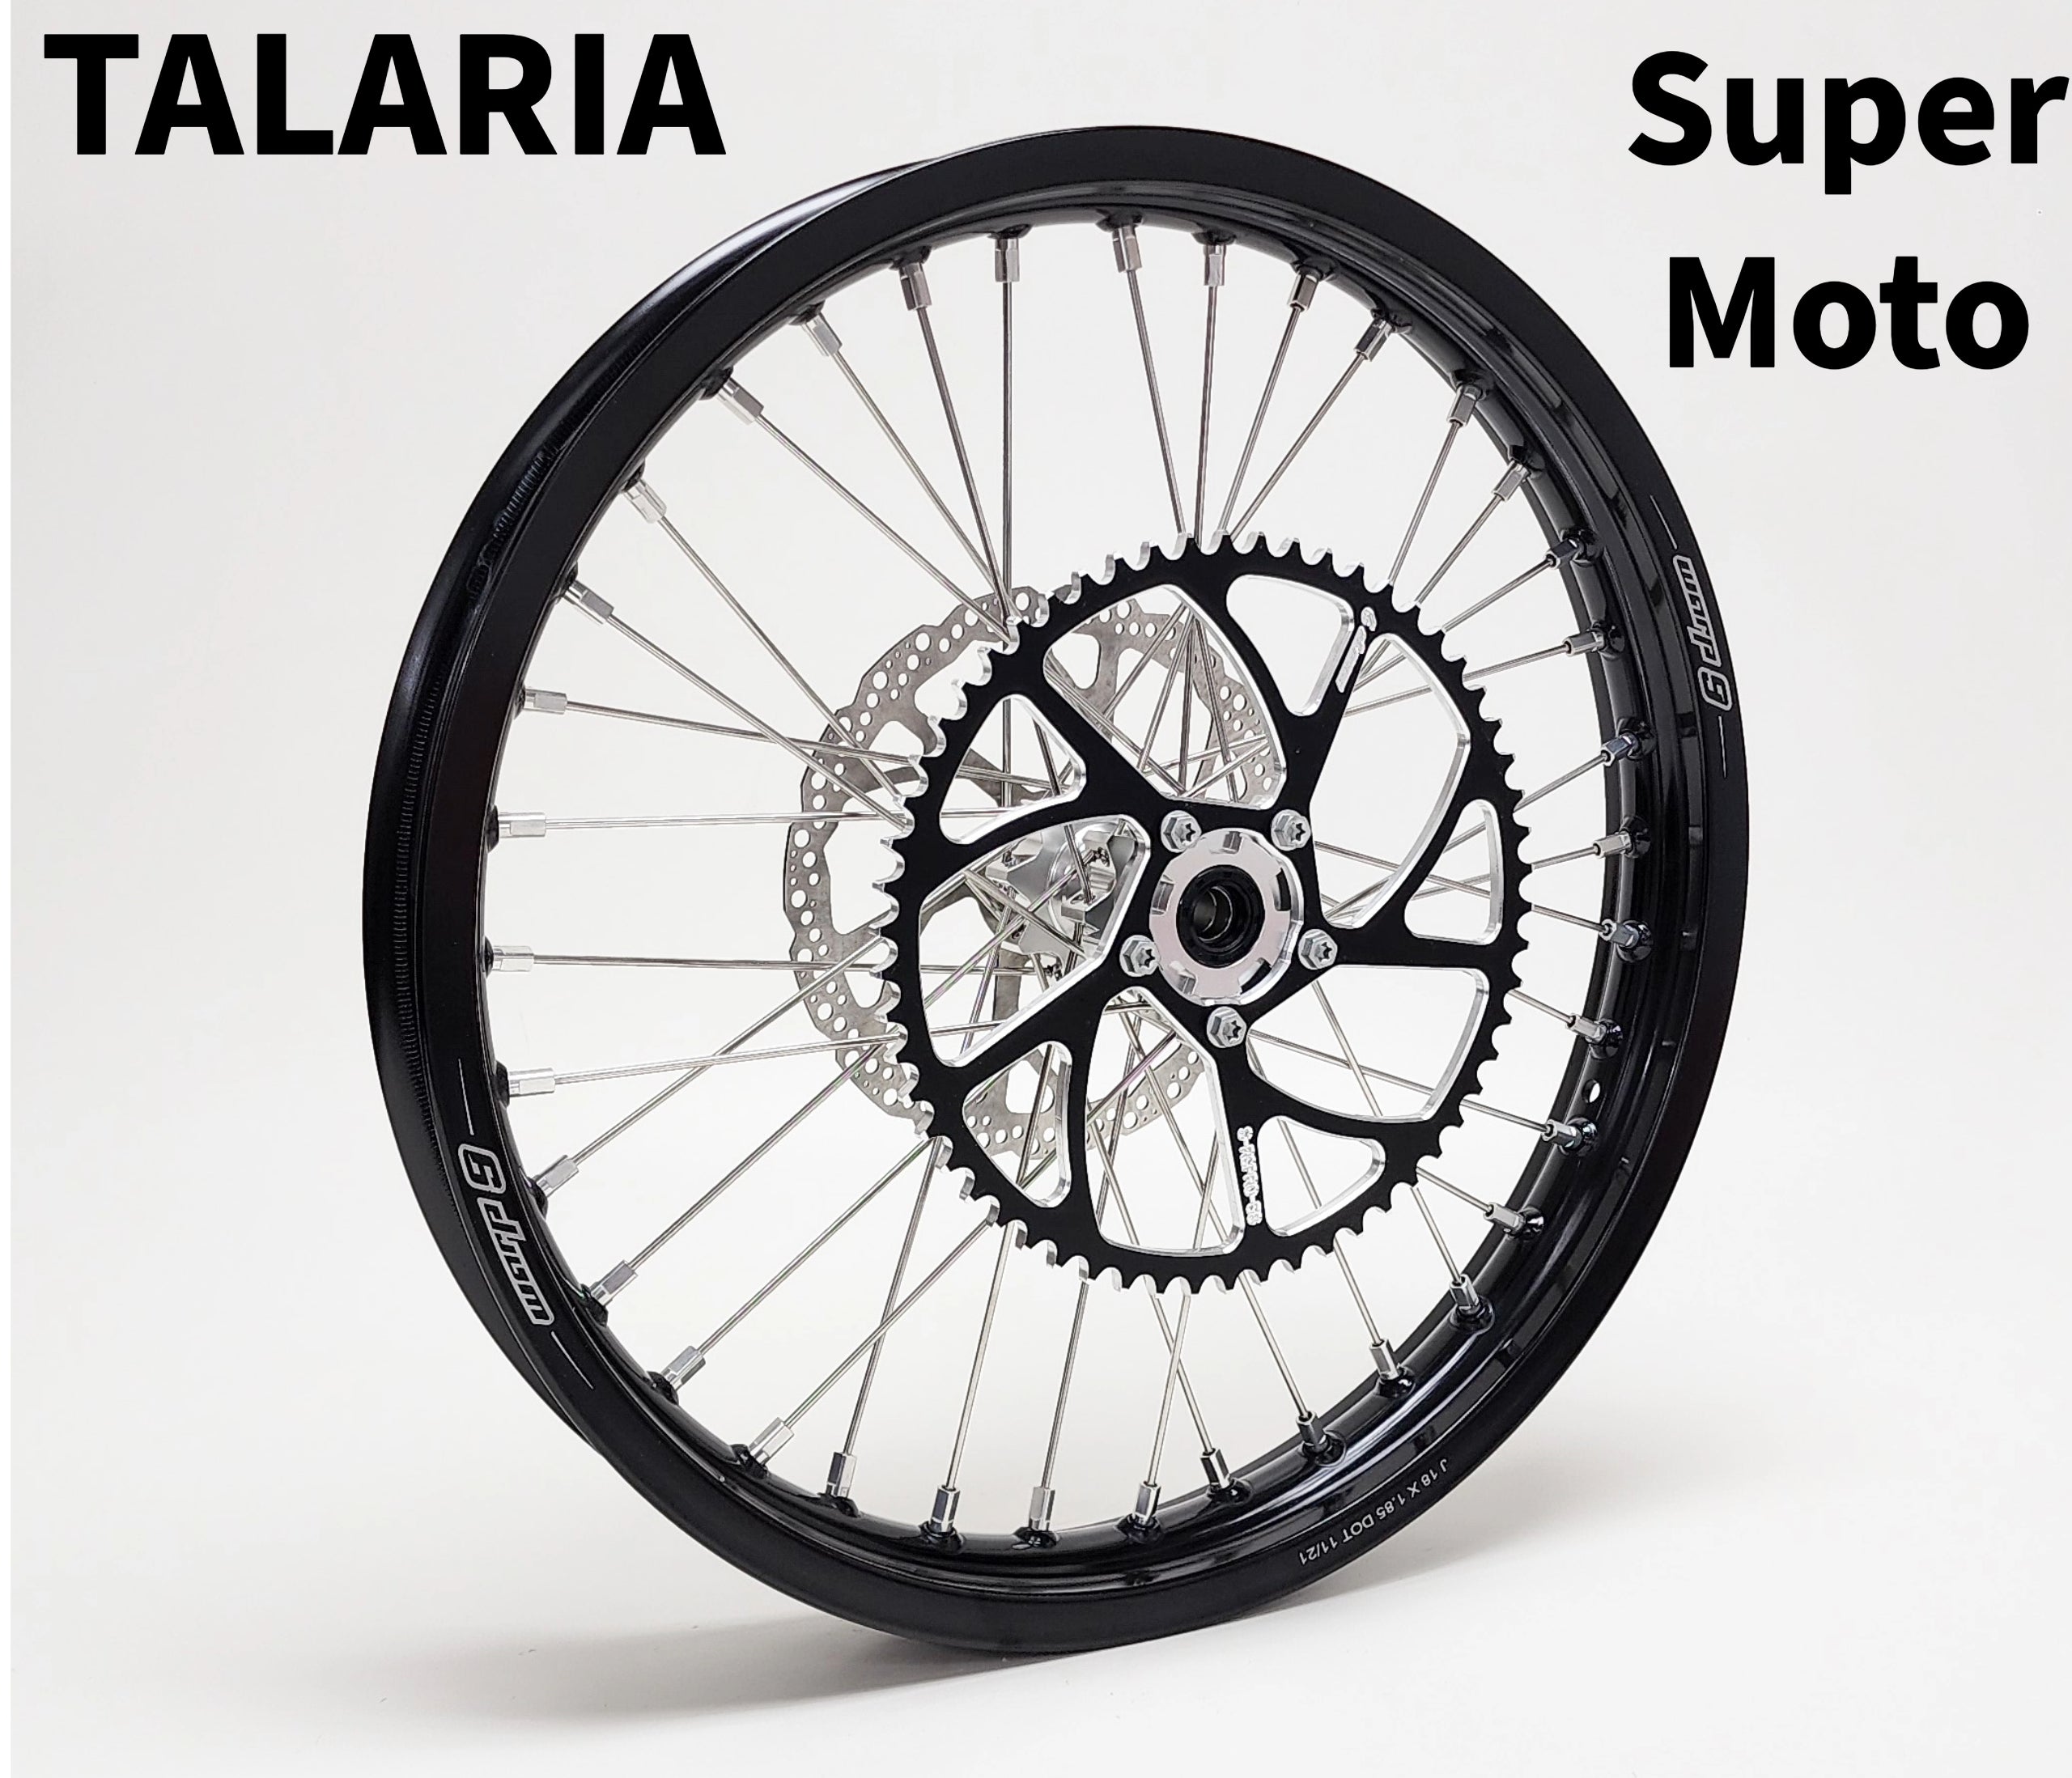 Warp 9 Complete 17in Super Moto Wheel Set for Talaria